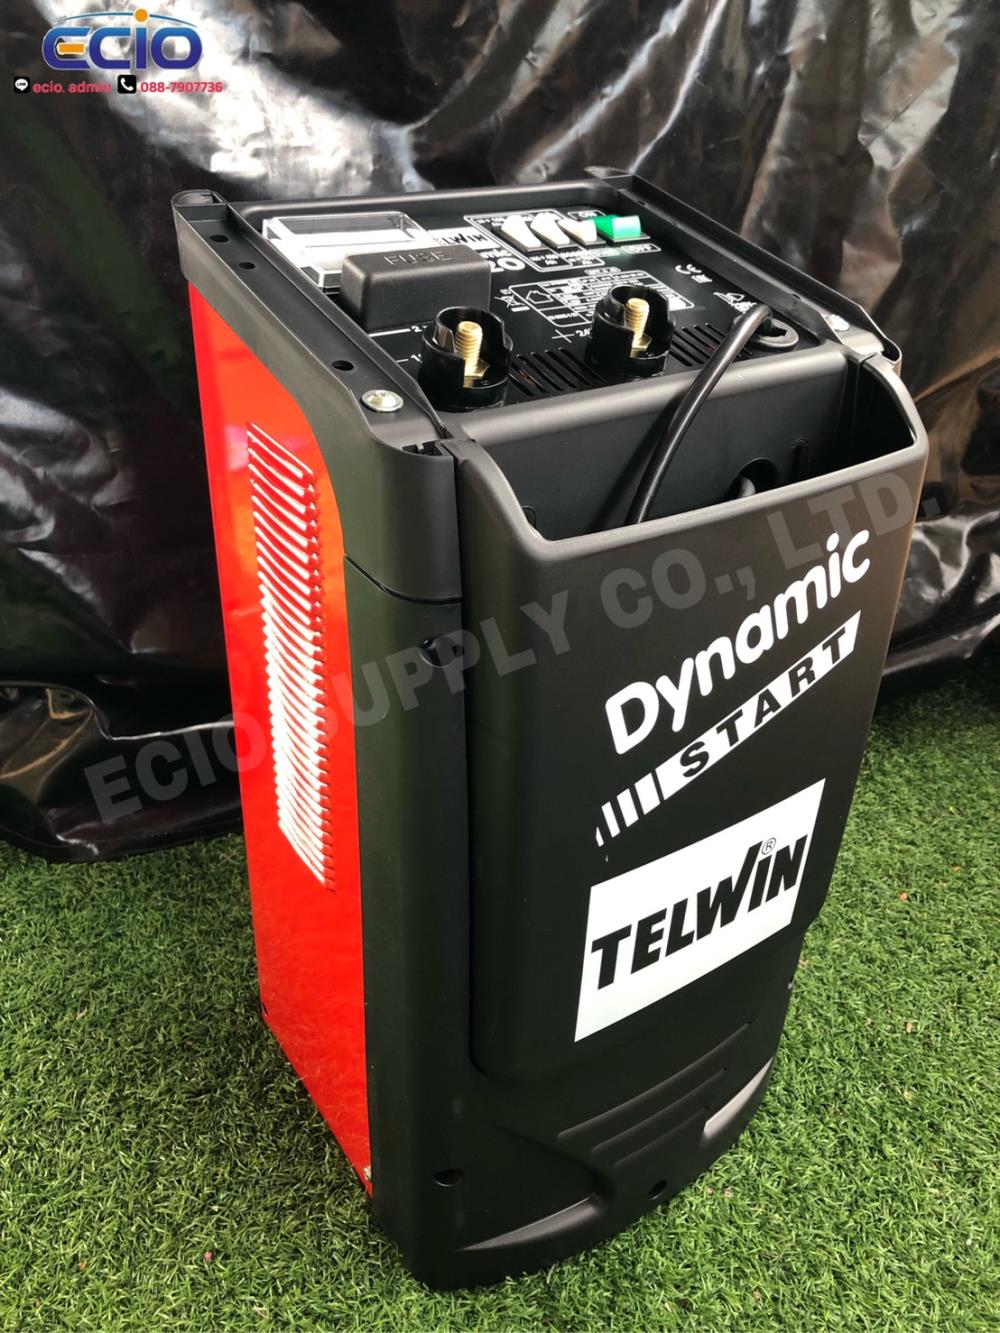 (G) TELWIN Battery Charger, Battery Starter Dynamic 320    